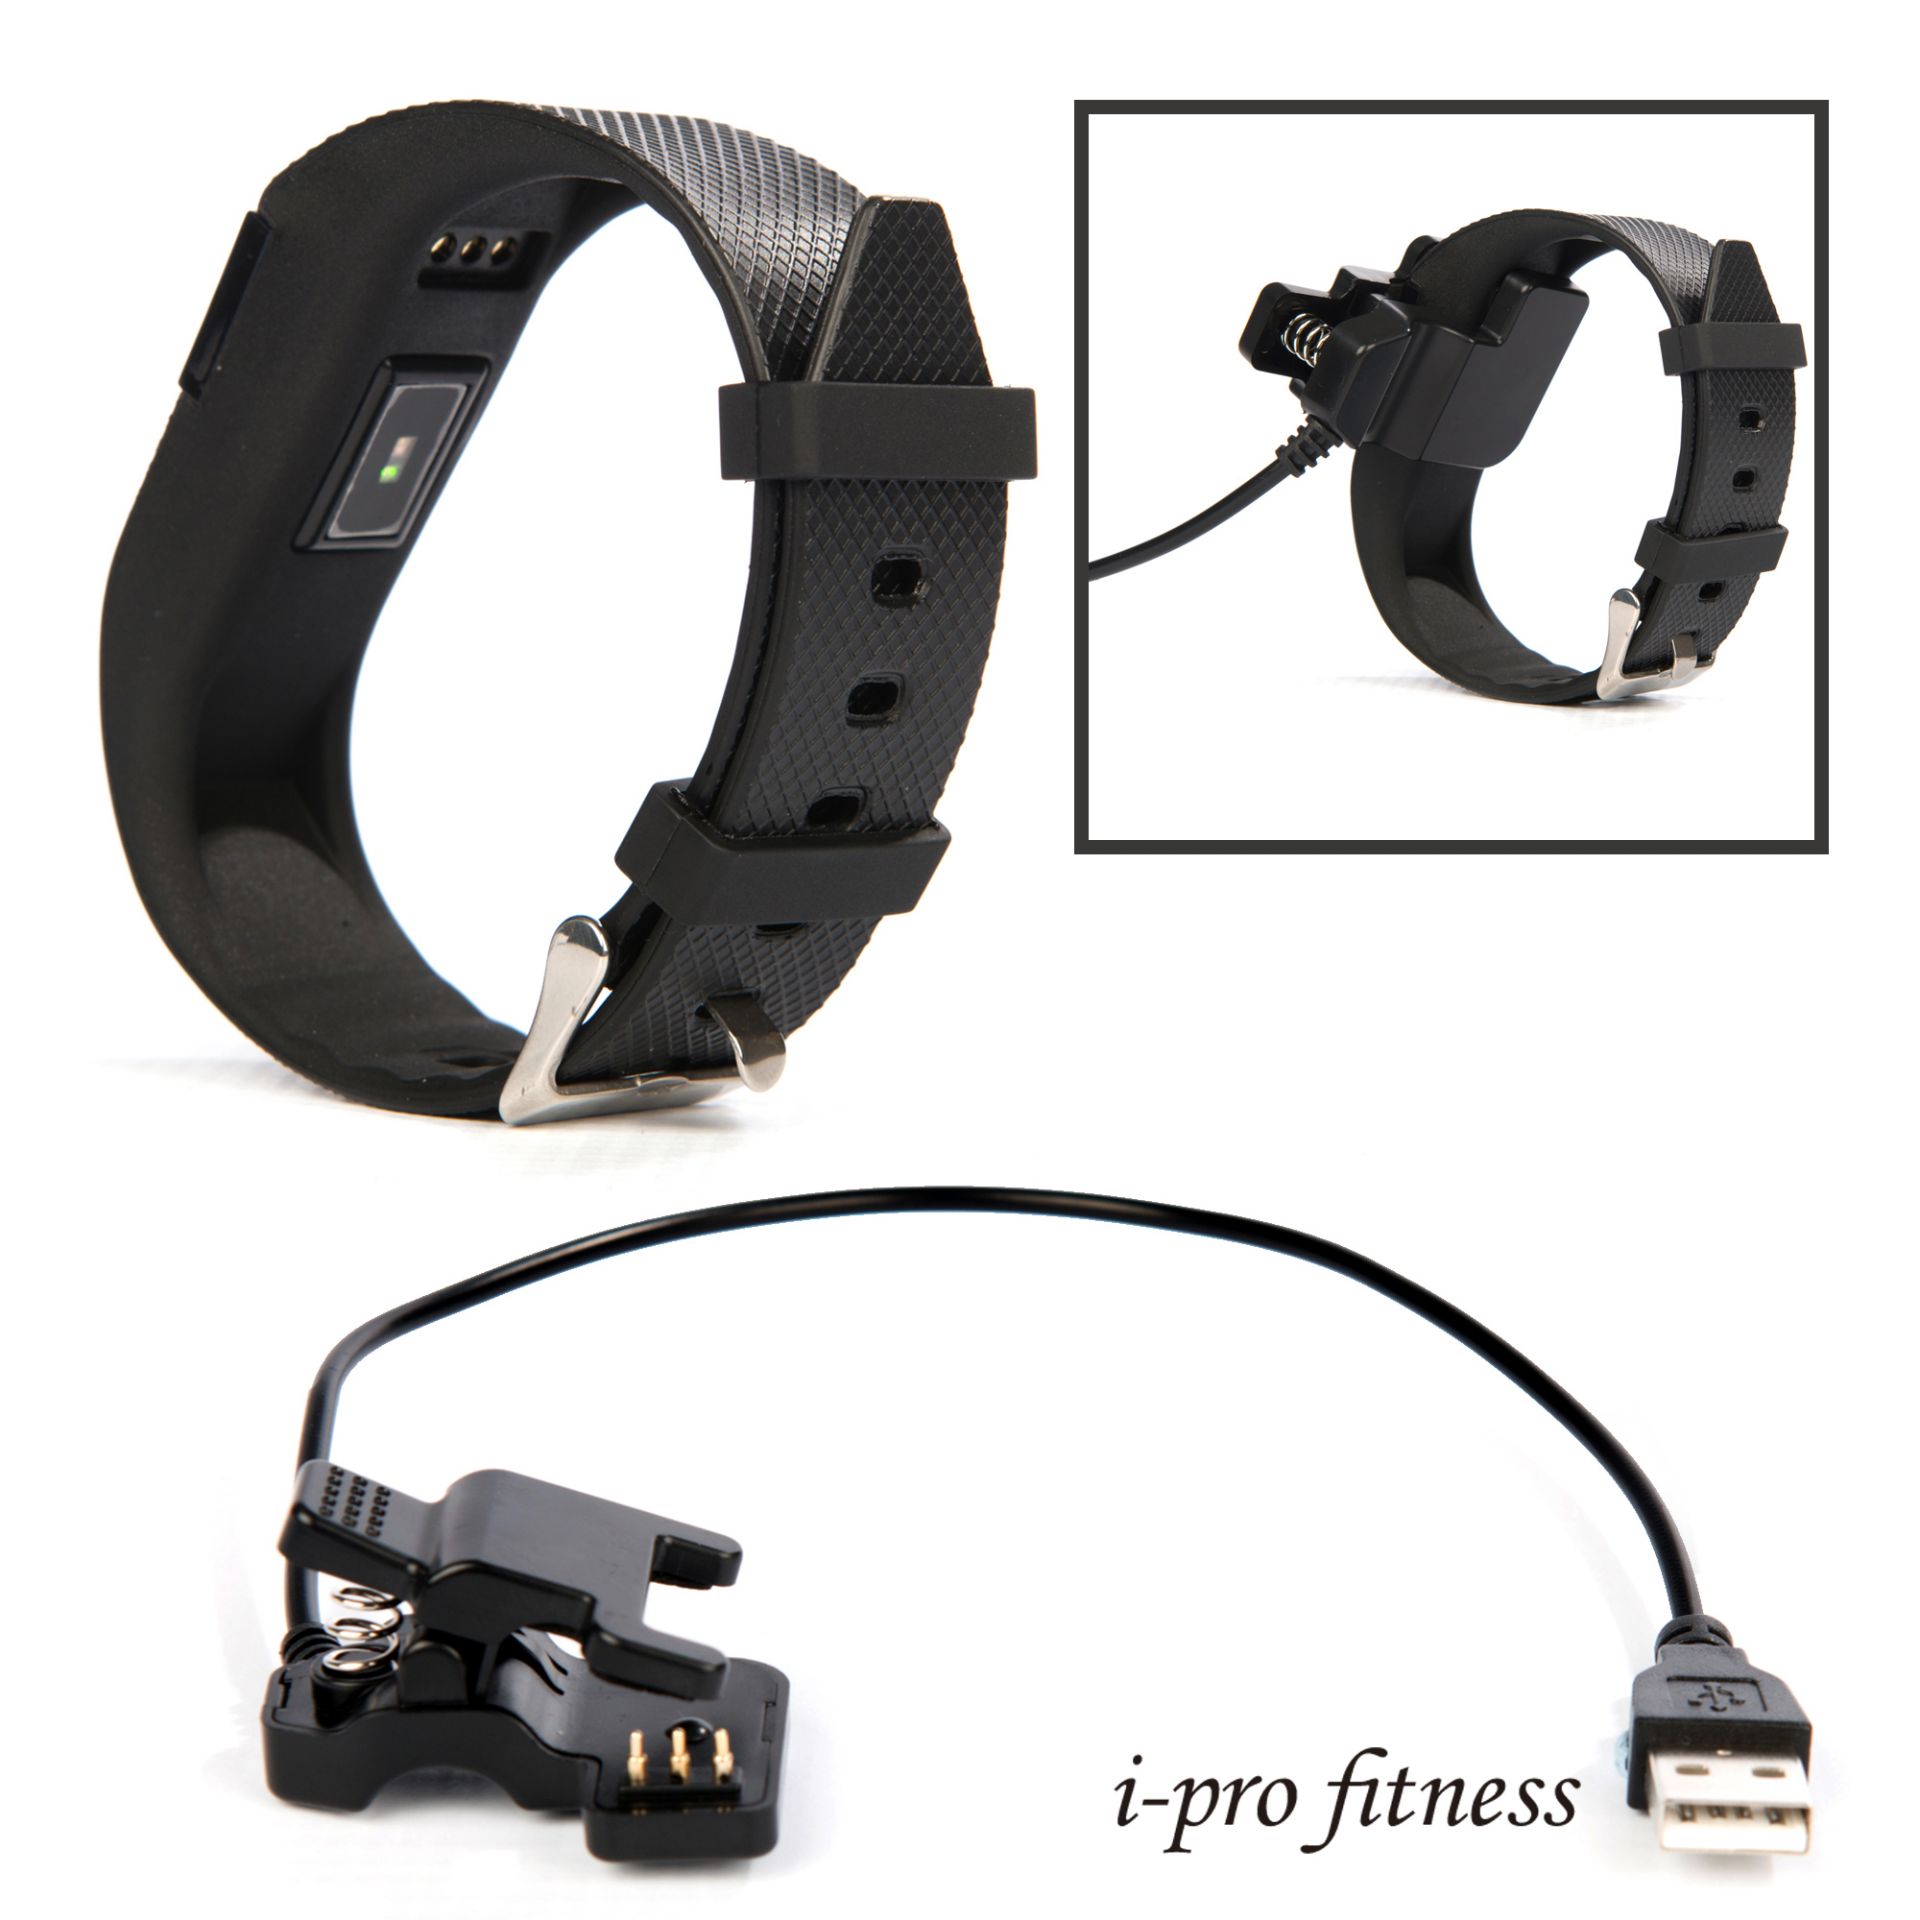 10x Fitness Tracker i-pro fitness, Bluetooth 4.0 Sports Smart Bracelet, Heart Rate Monitor - Image 6 of 8